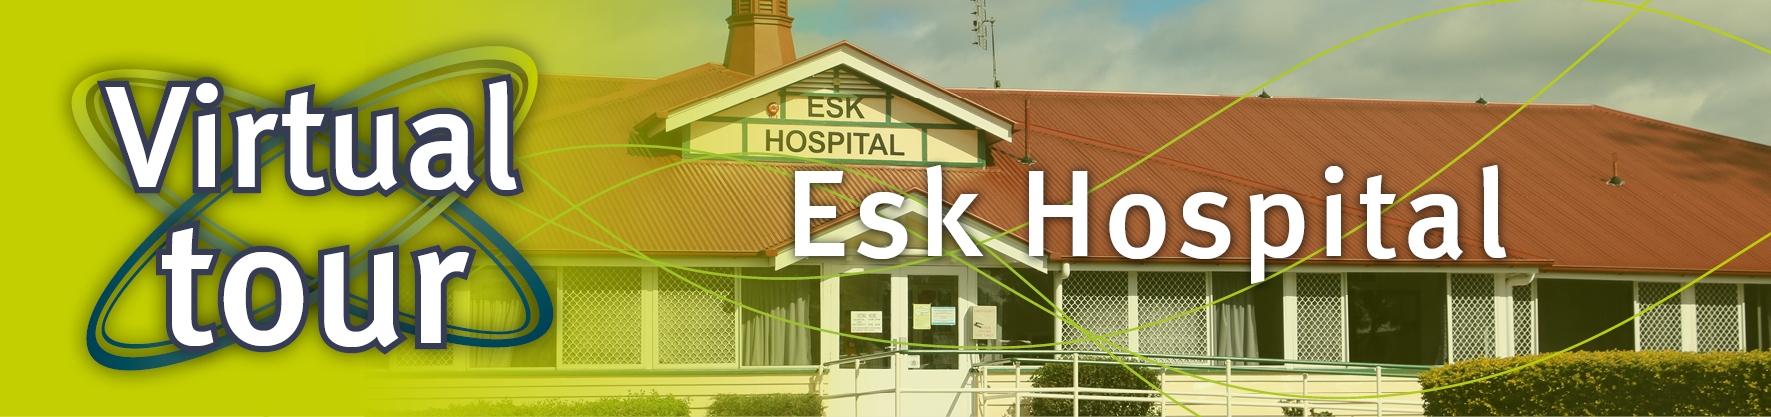 Esk Hospital